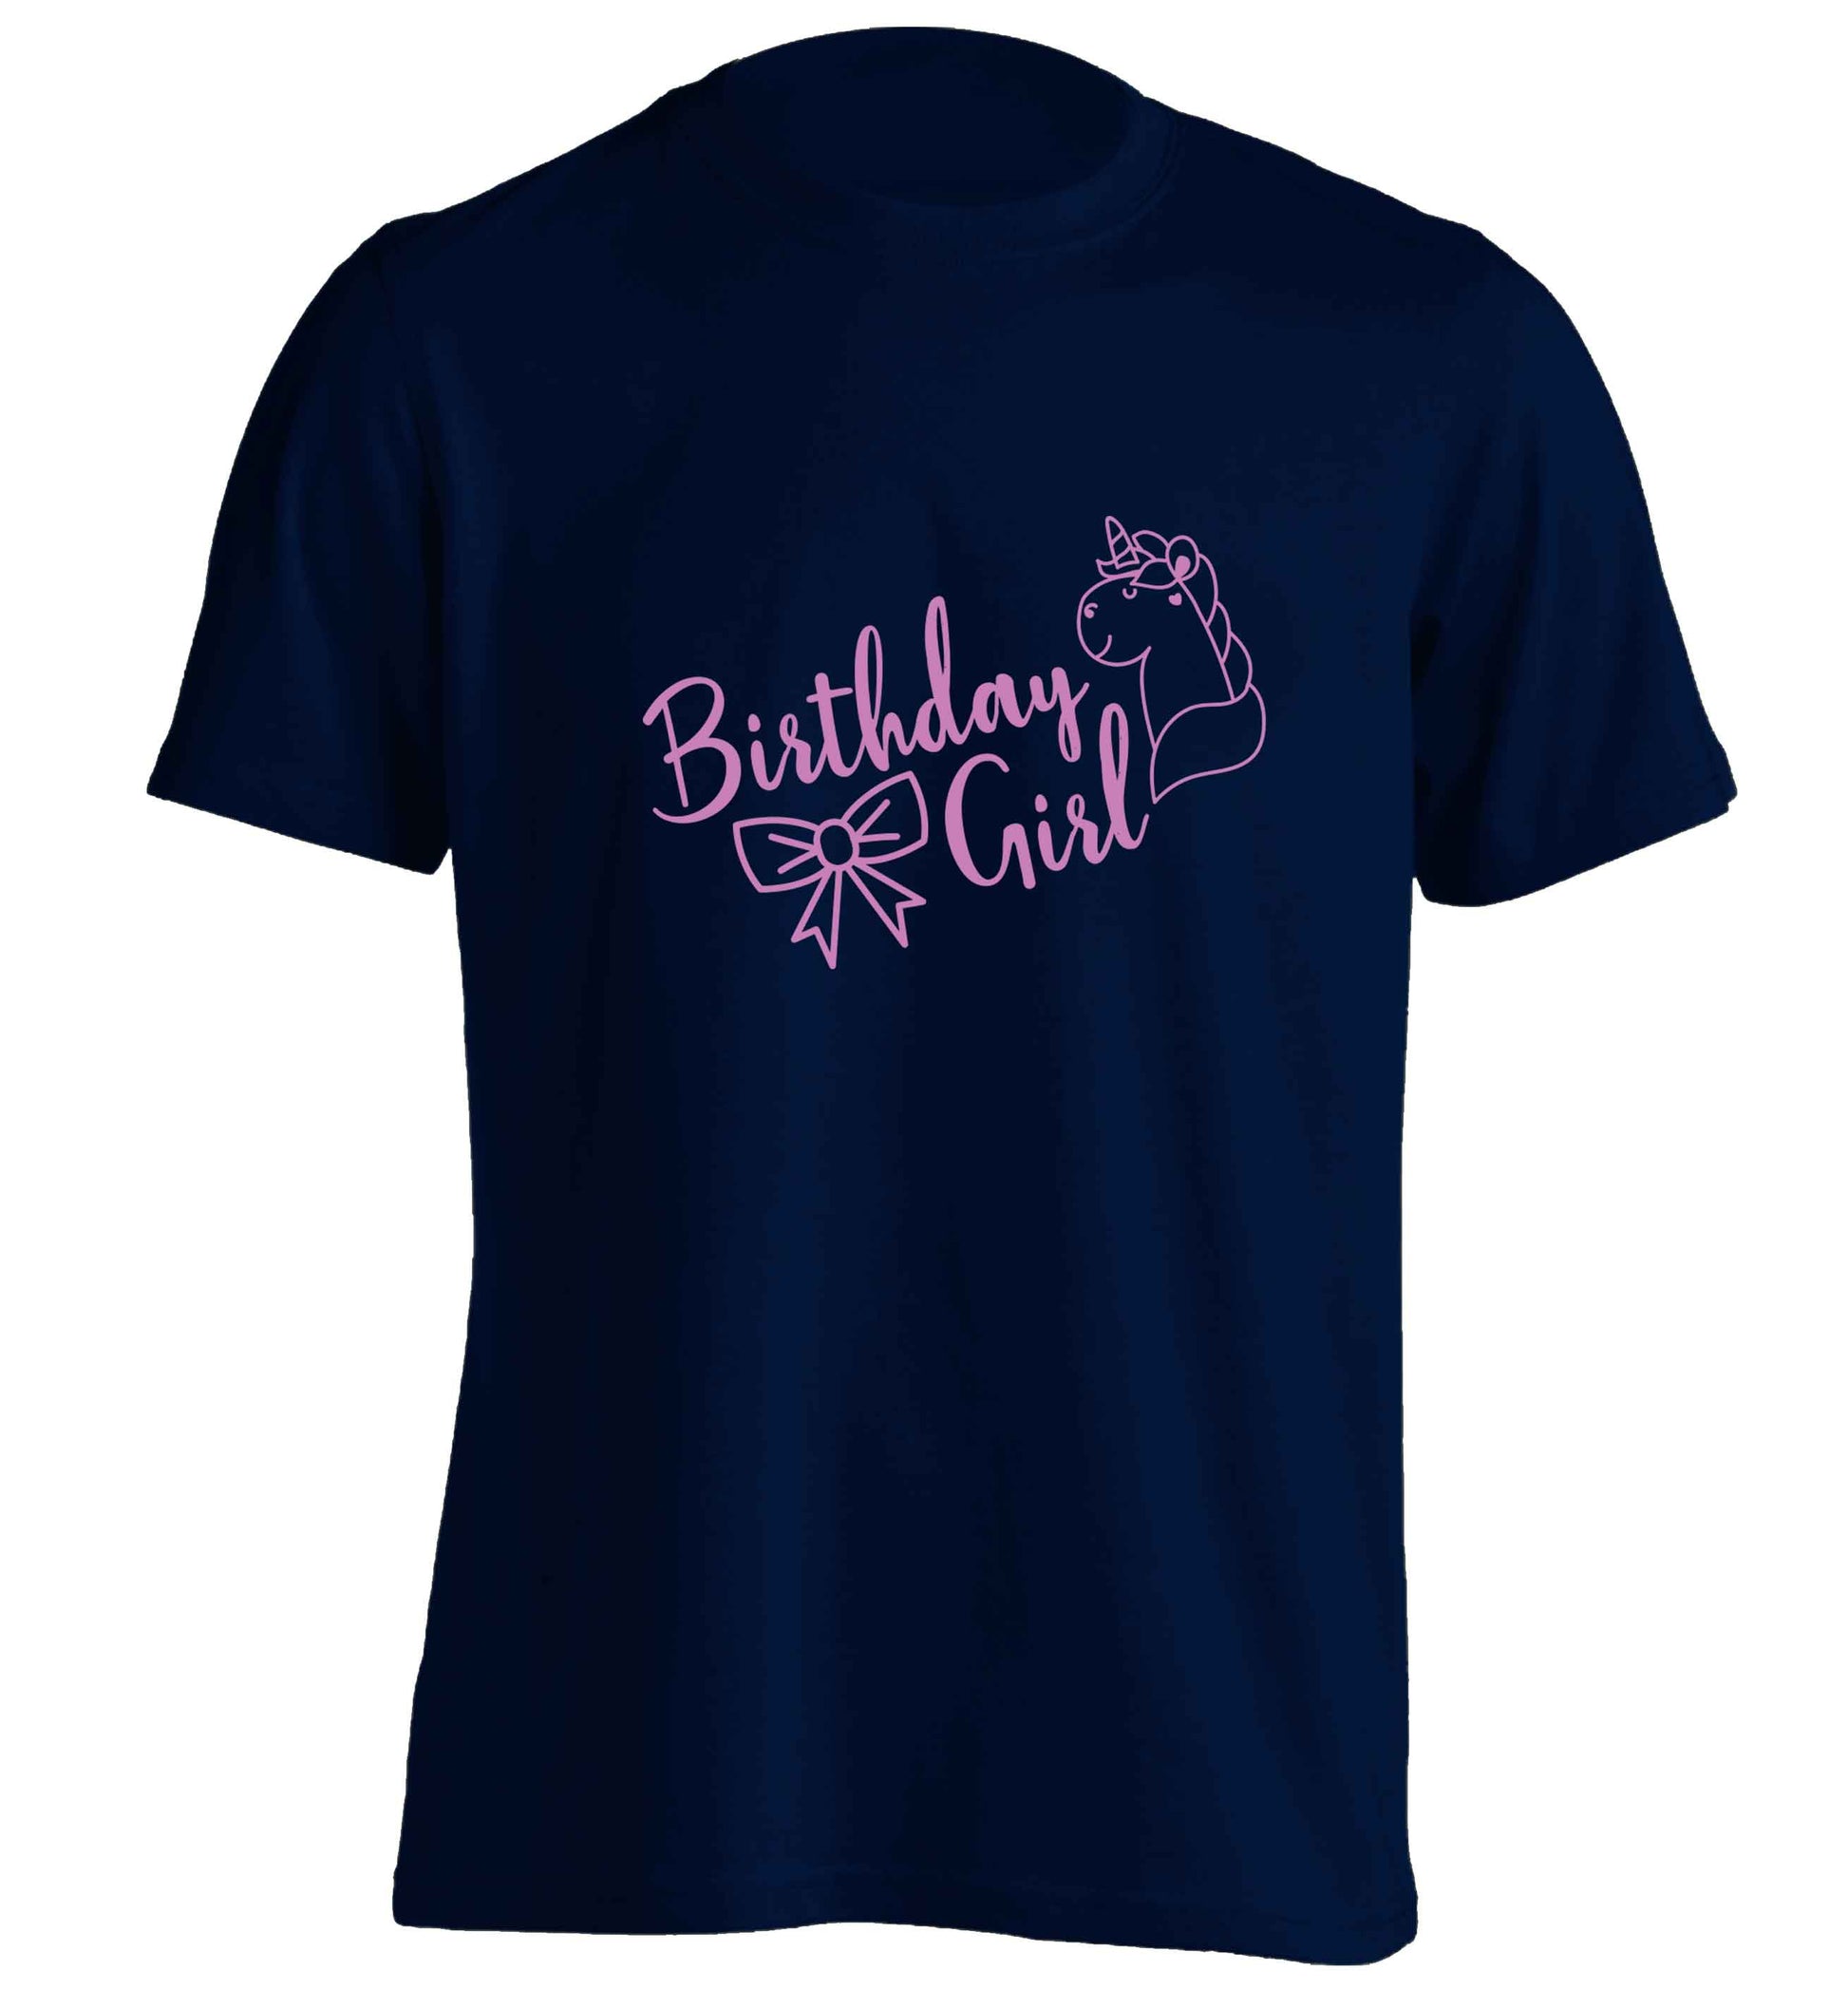 Birthday girl adults unisex navy Tshirt 2XL